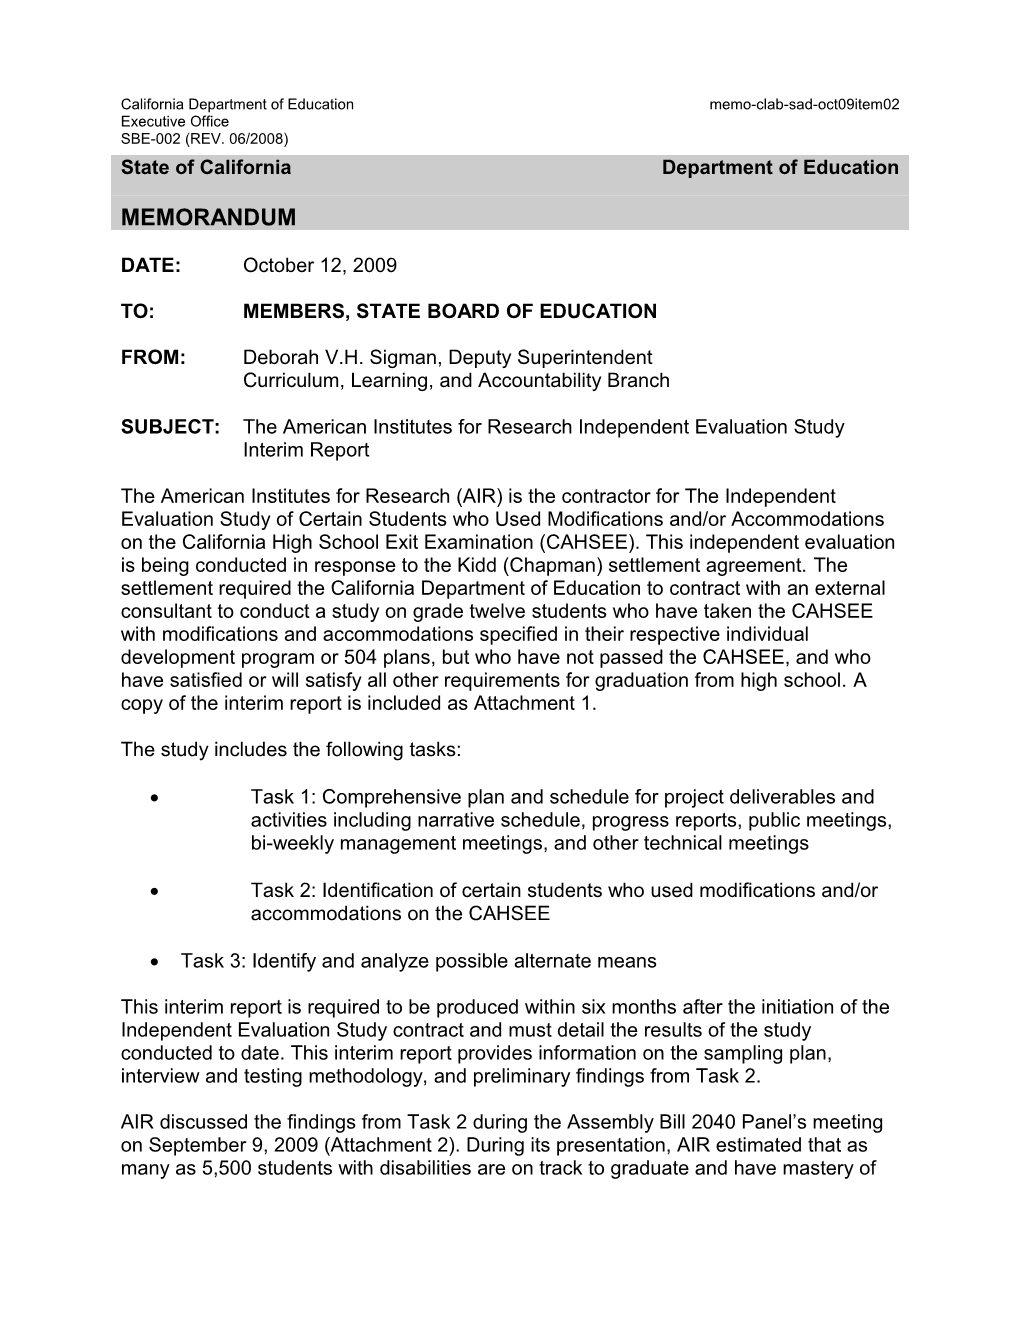 October 2009 CLAB Item 03 - Information Memorandum (CA State Board of Education)